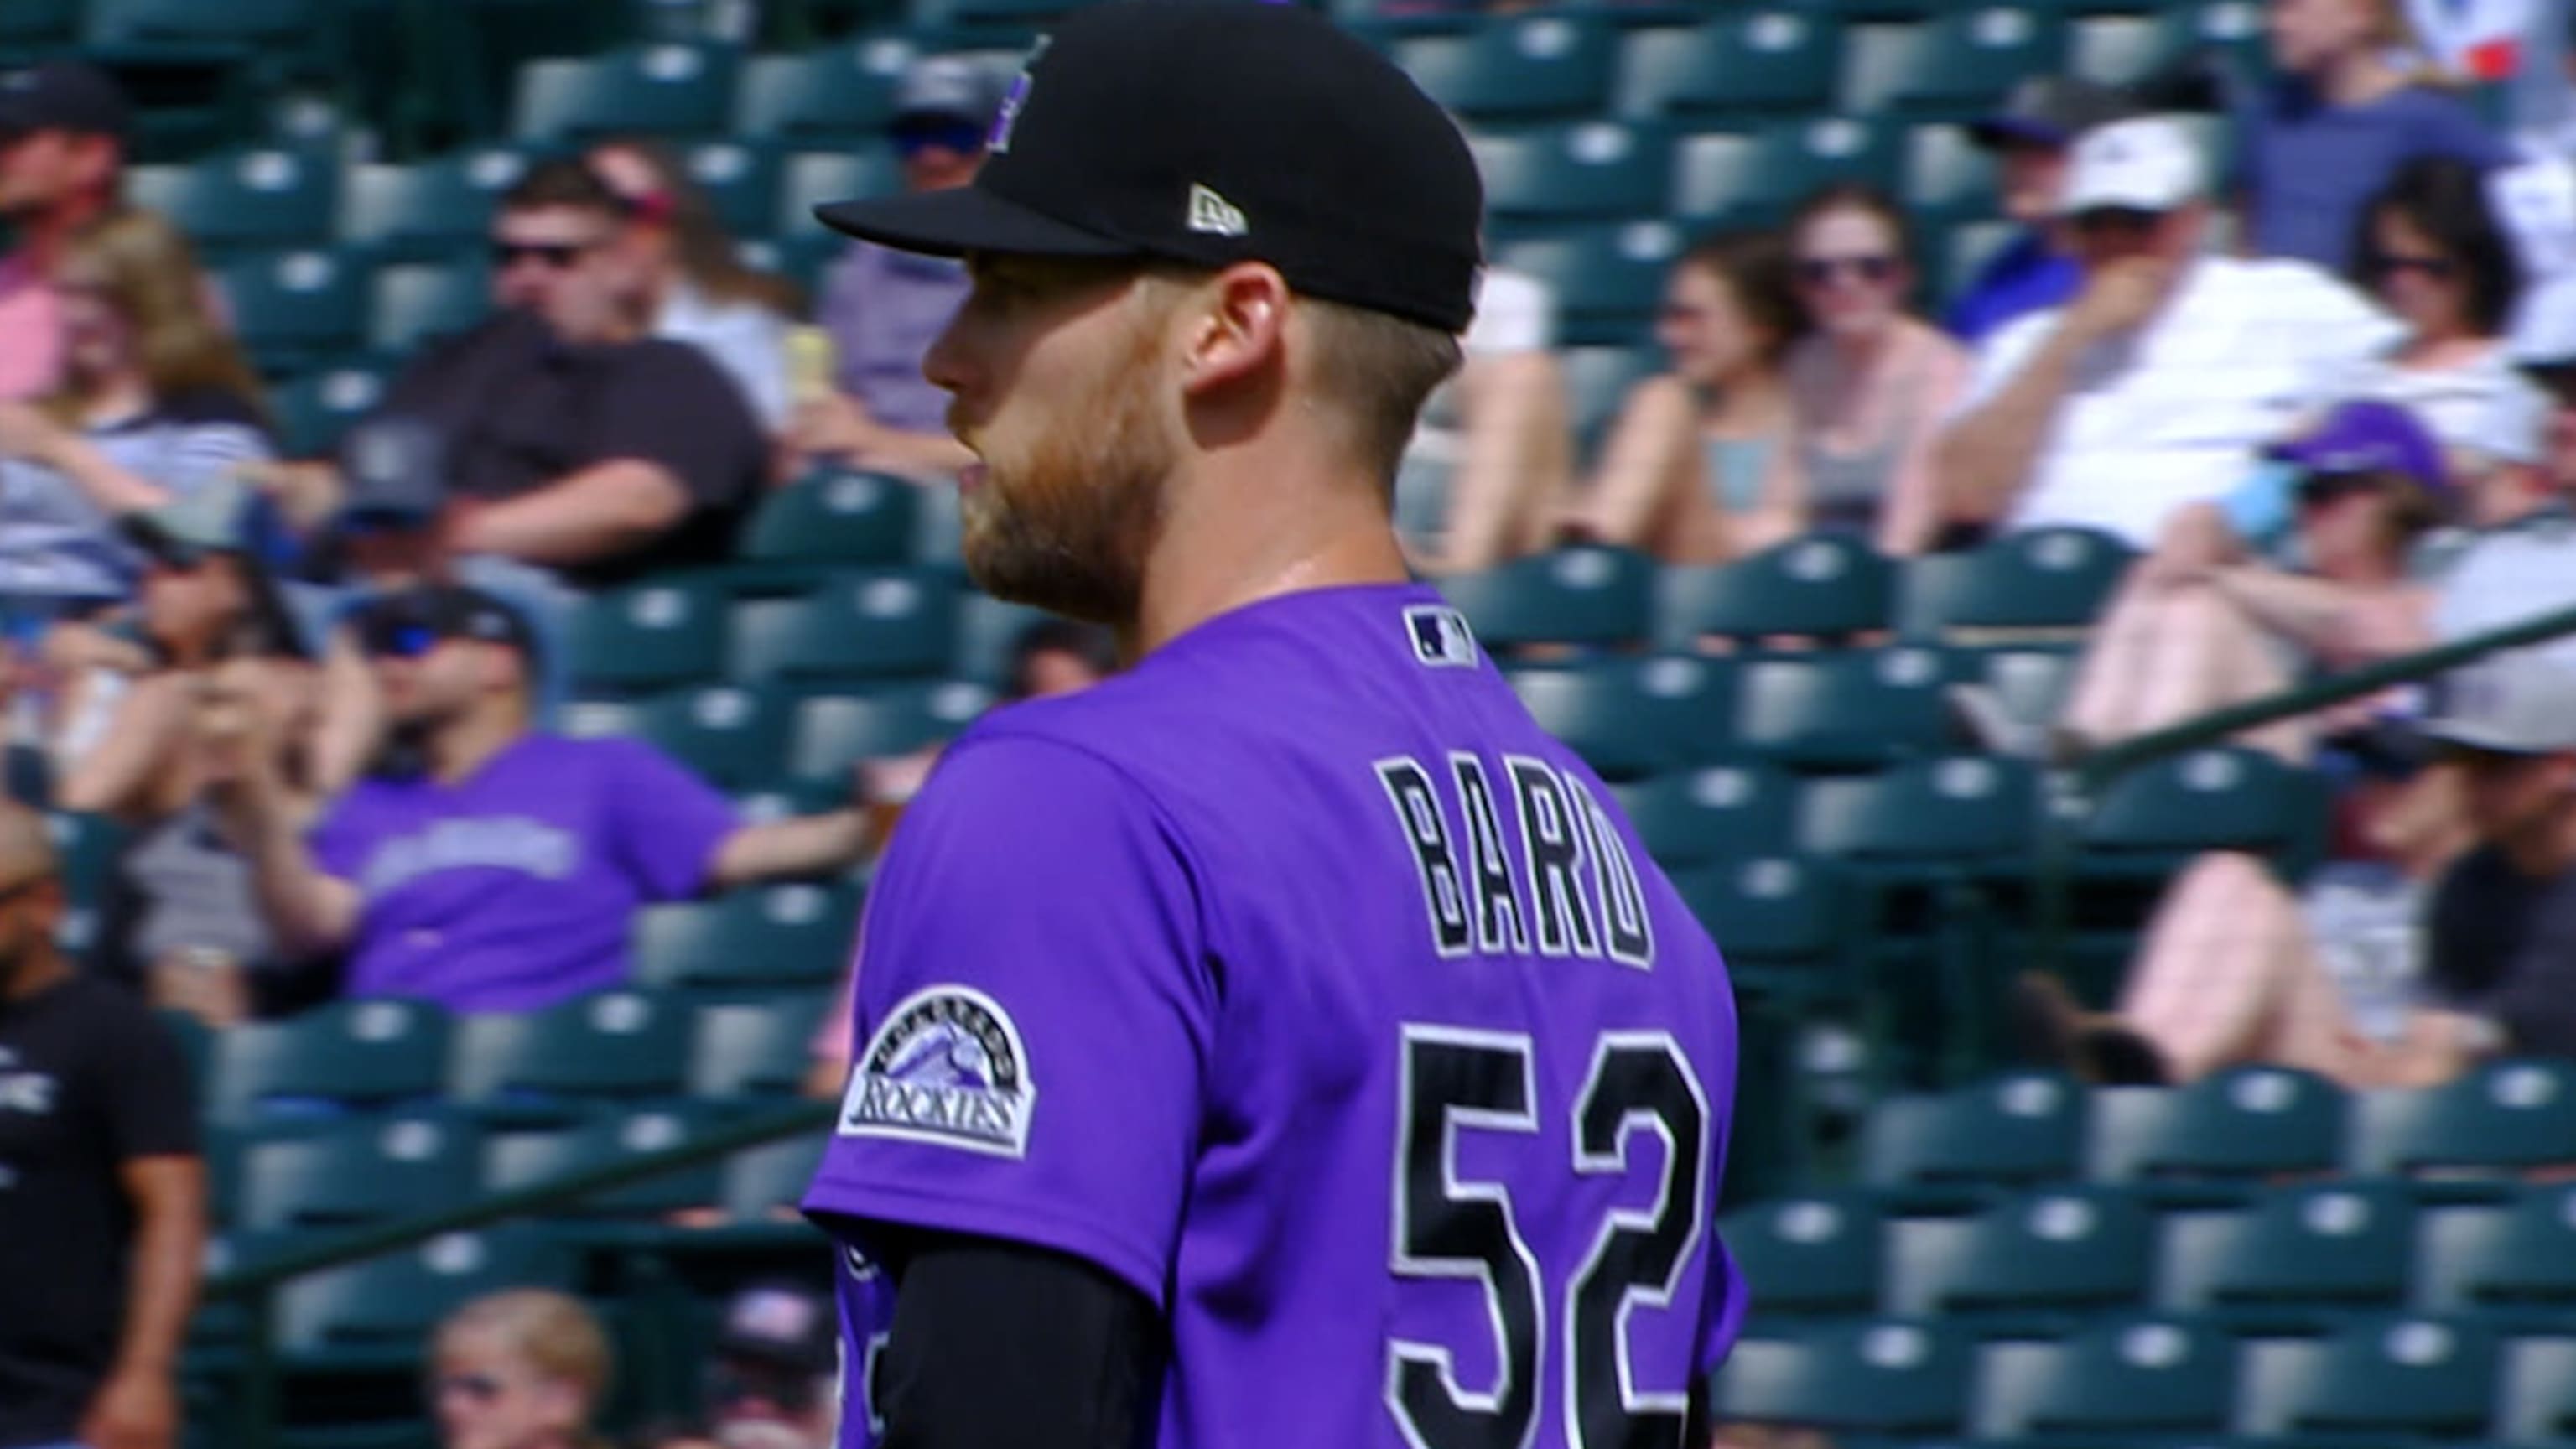 Colorado Rockies Purple MLB Jerseys for sale